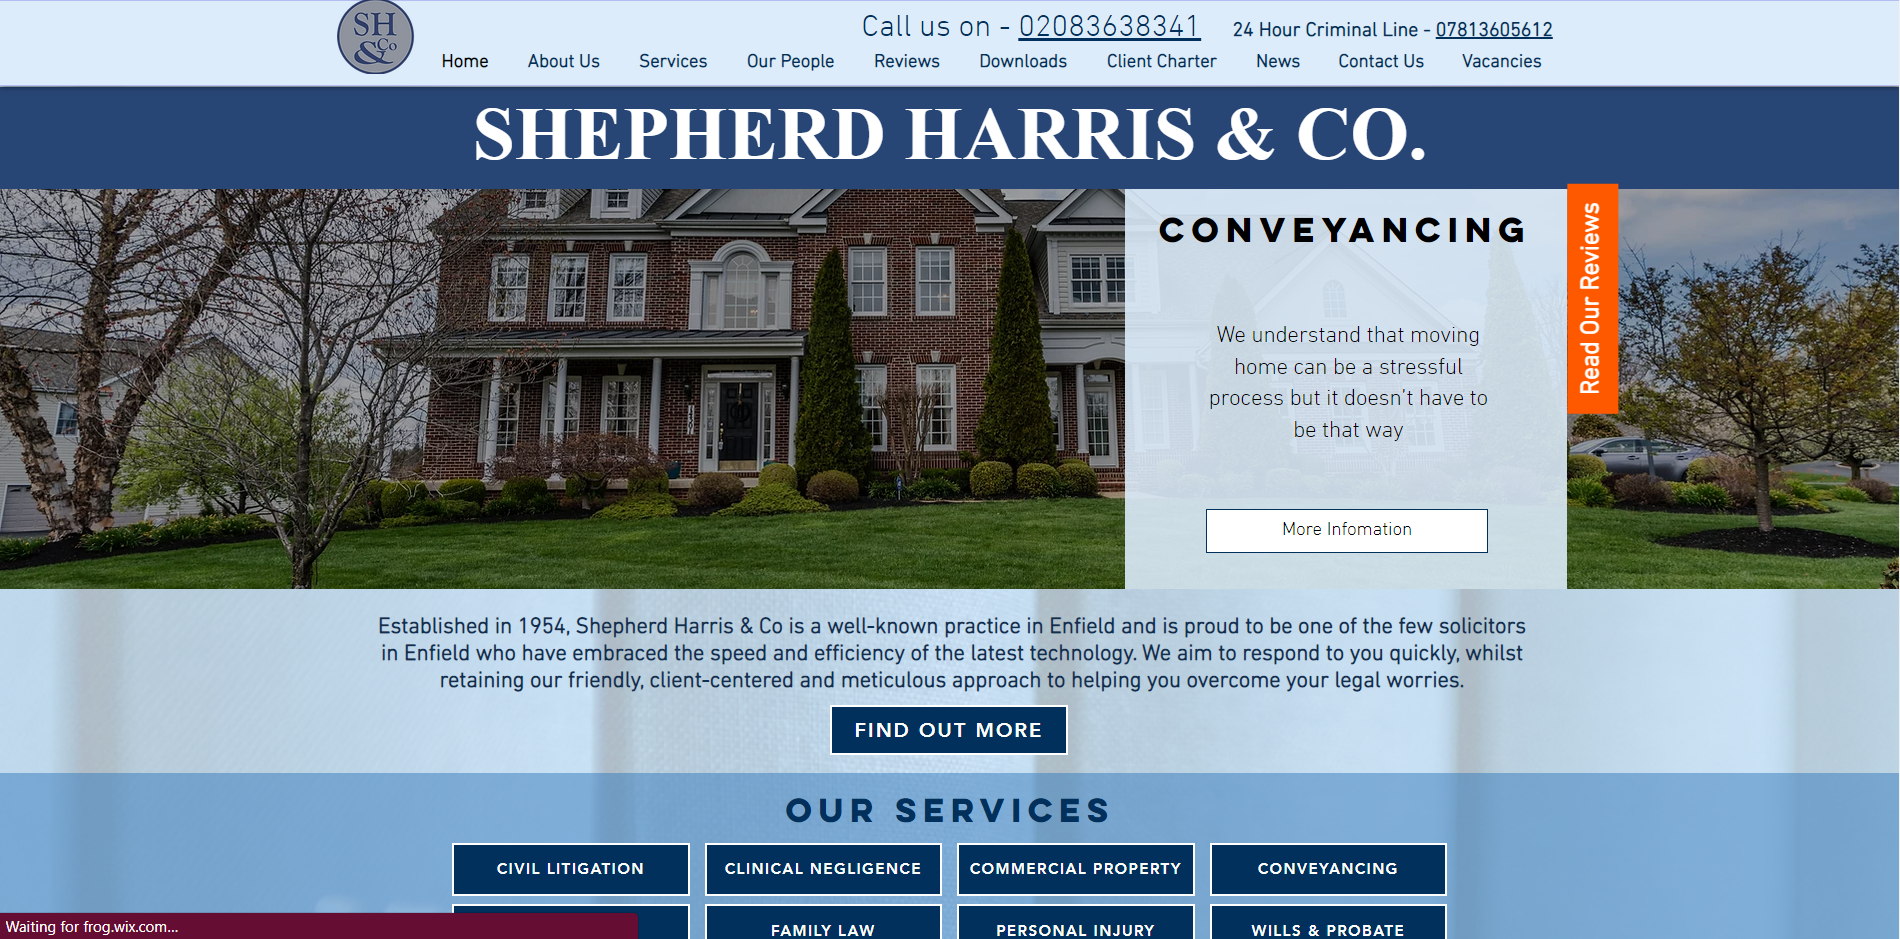 Shepherd Harris & Co